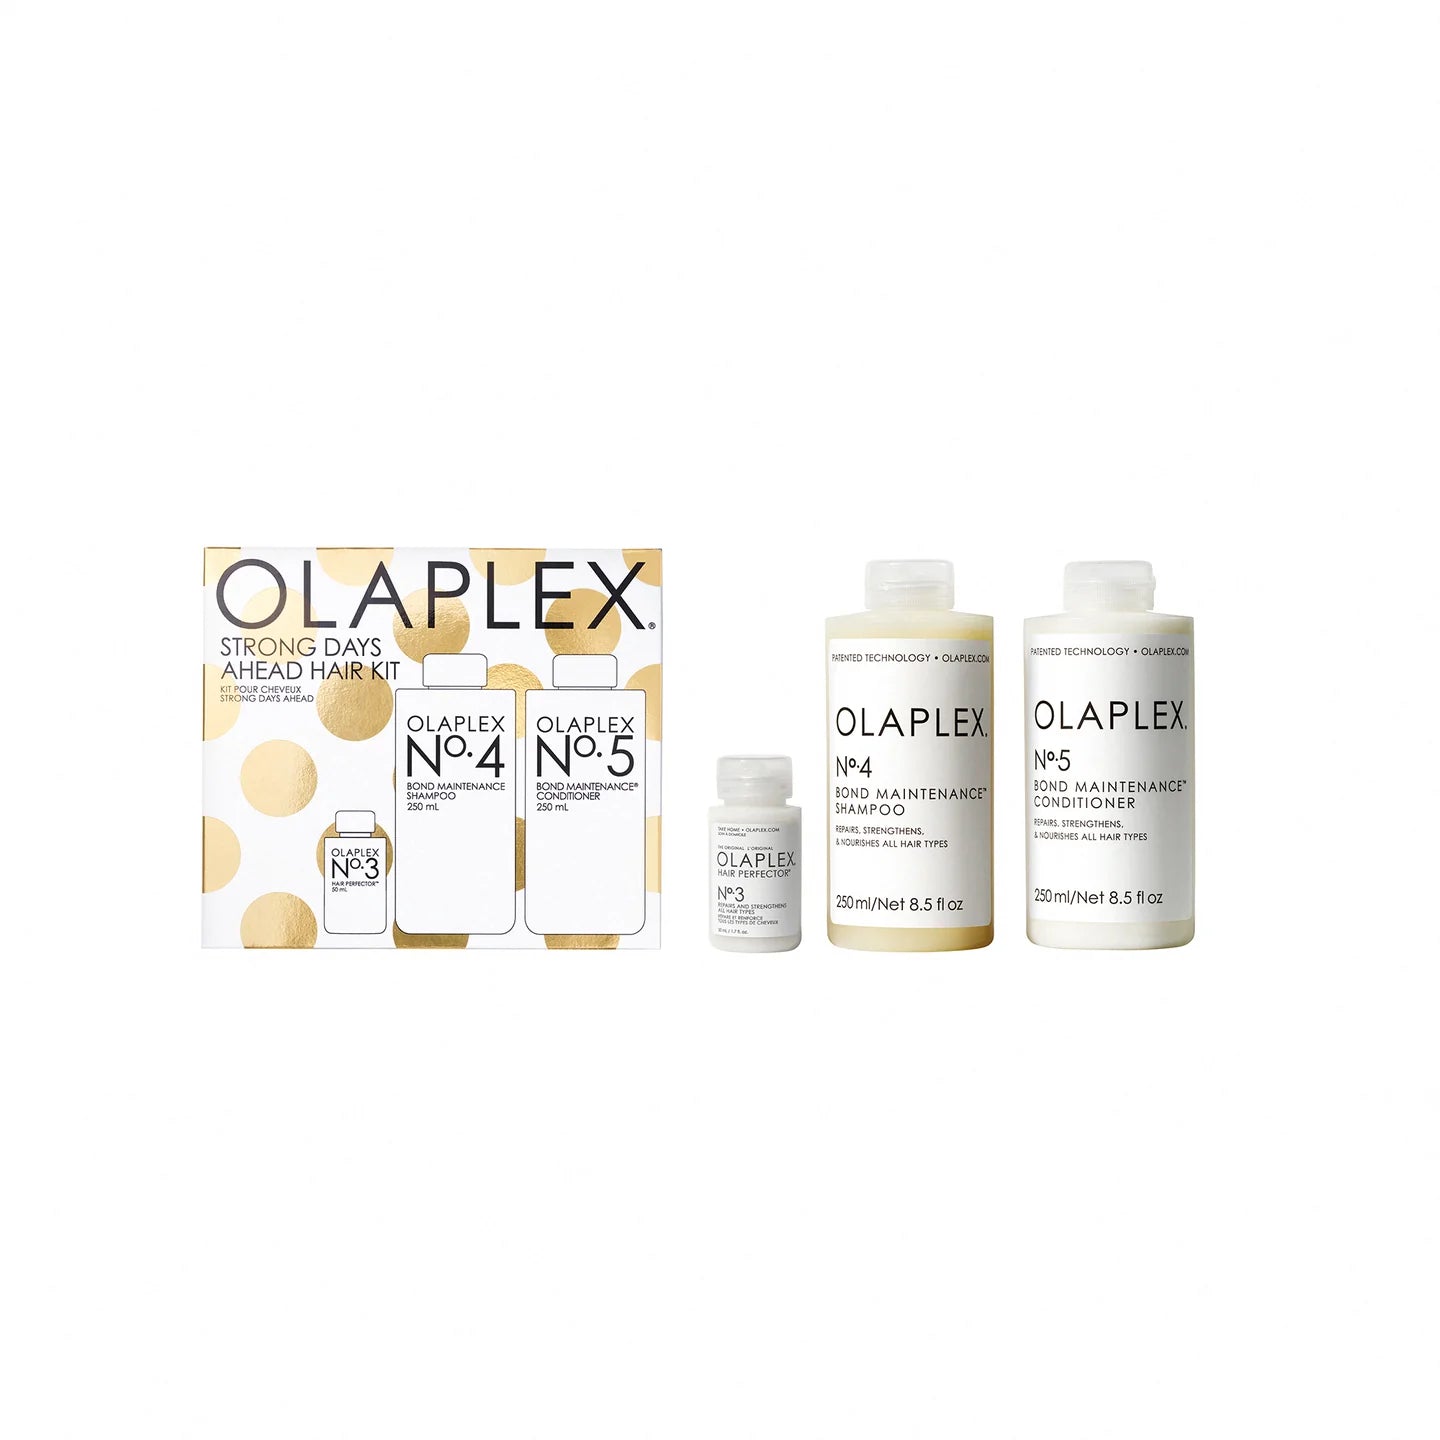 Olaplex limited edition kit product image